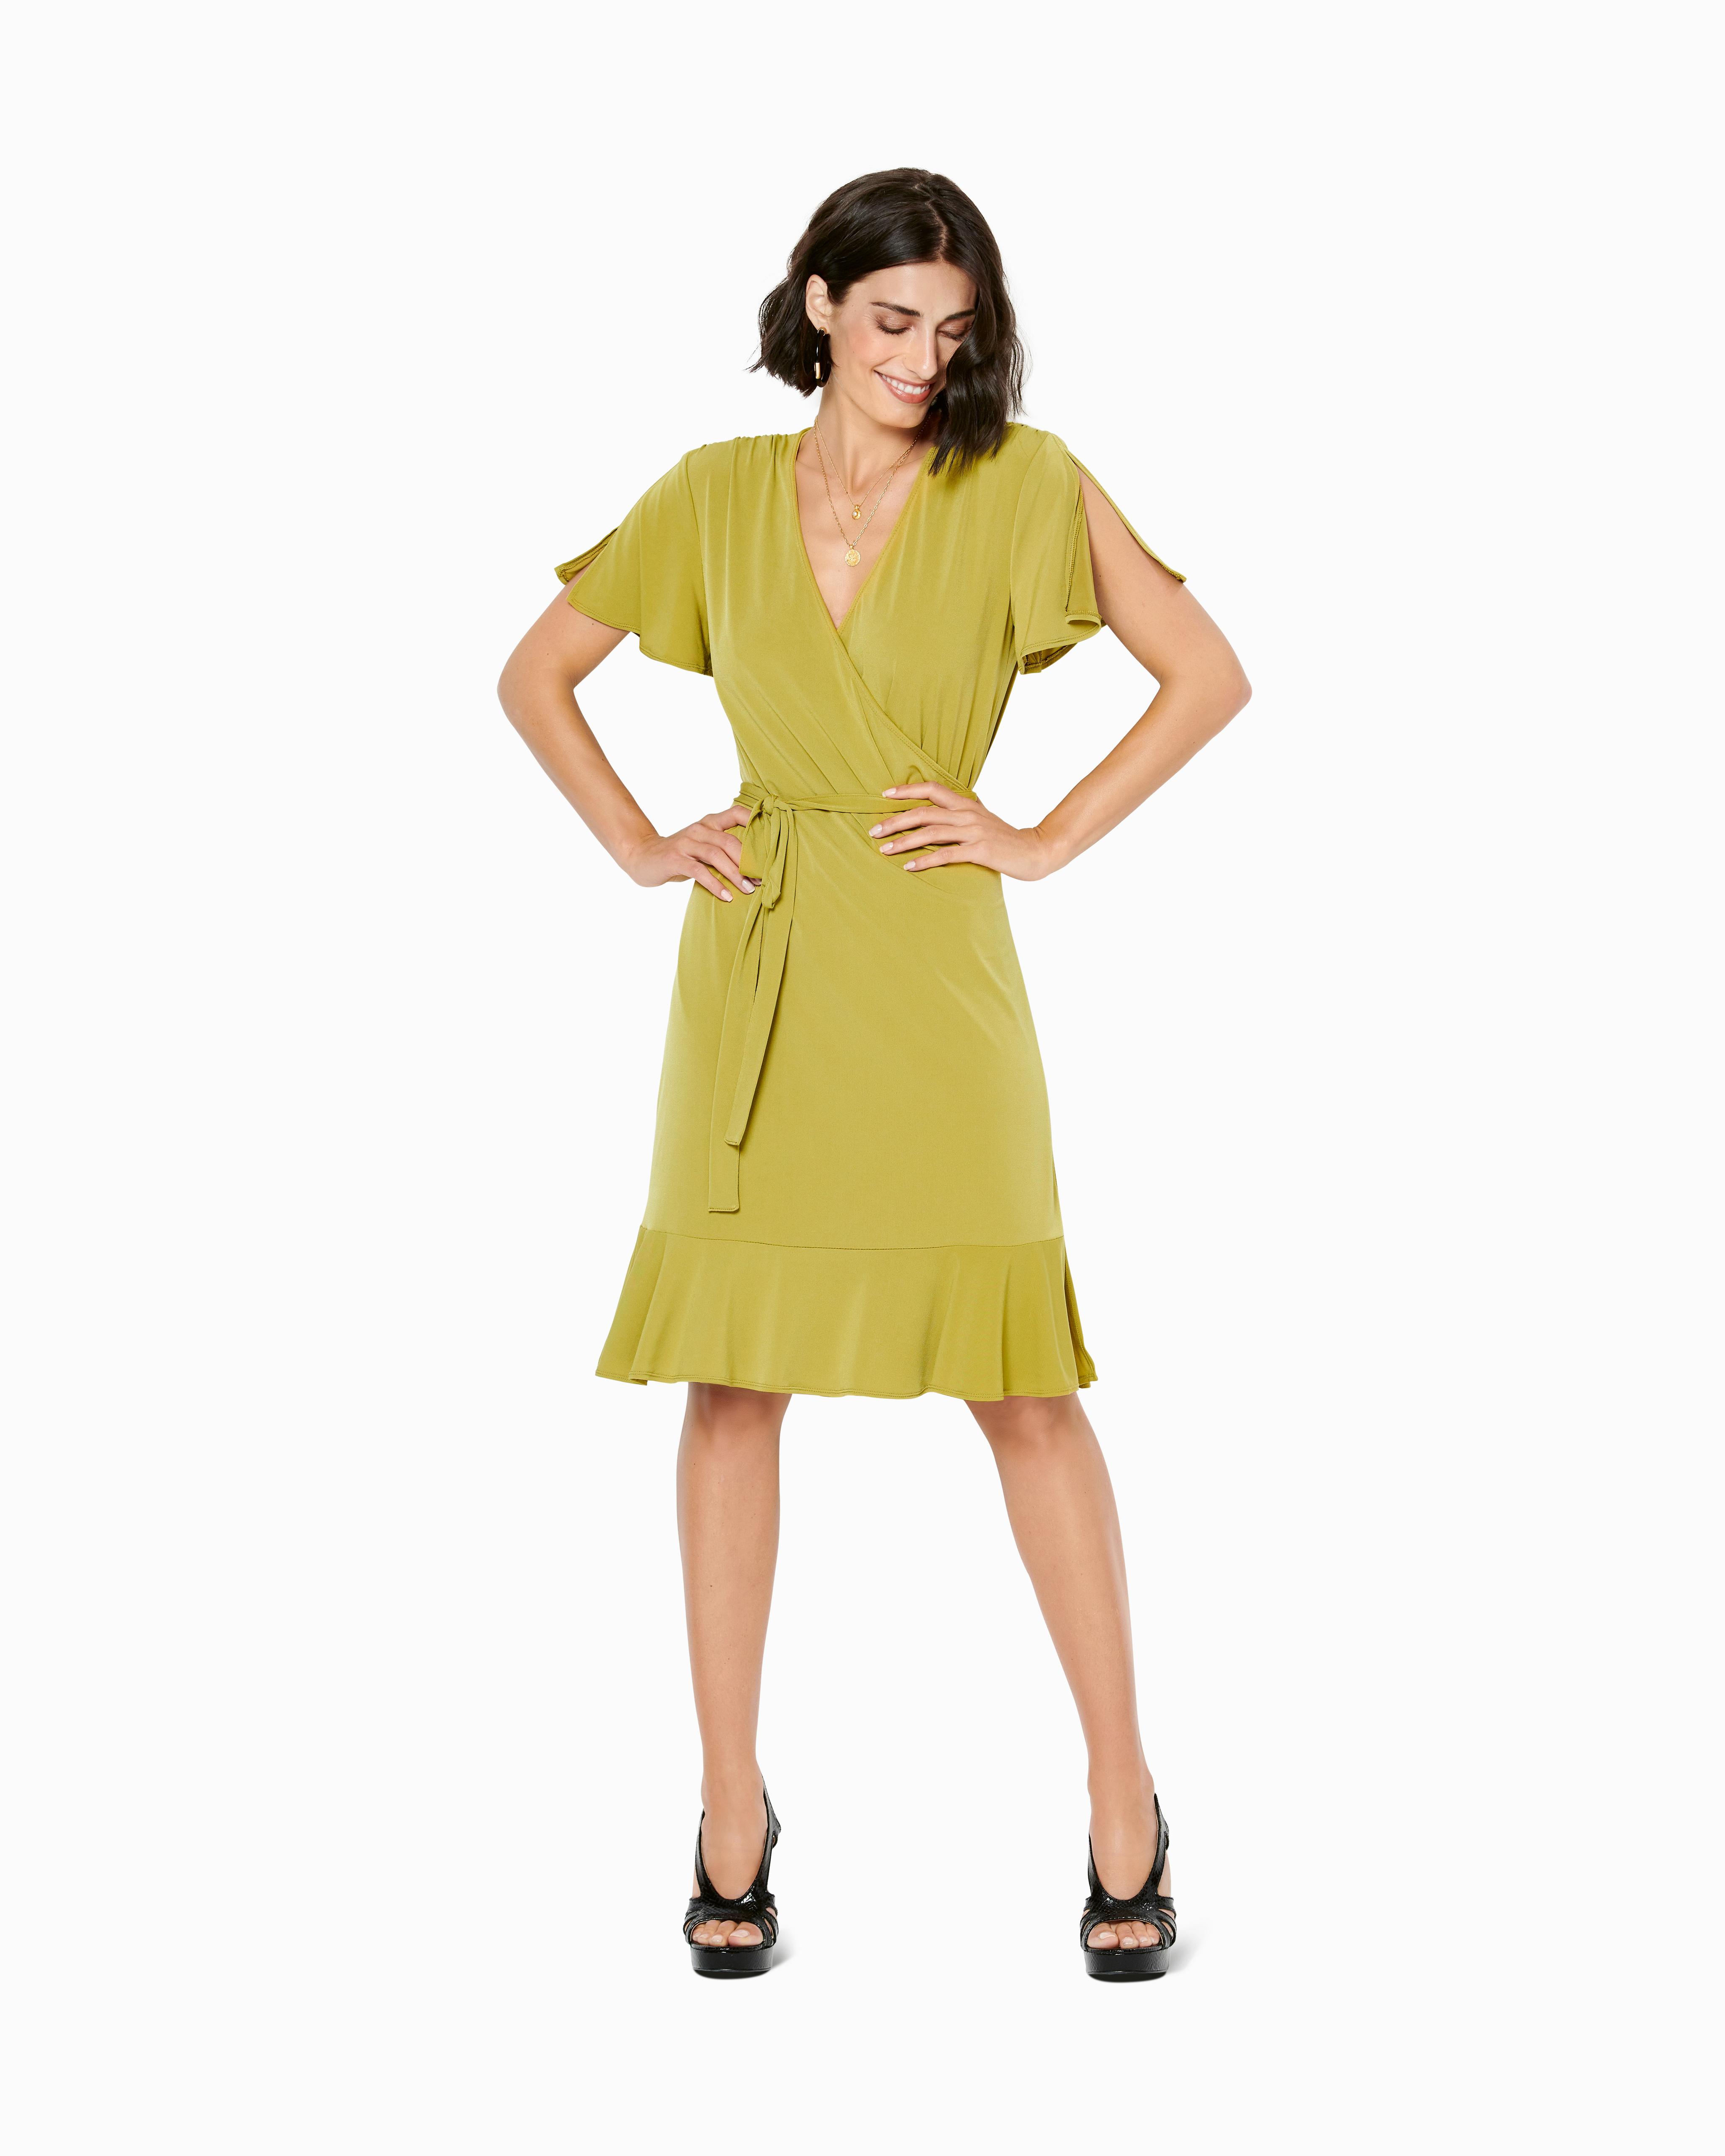 Burda B6238 Wrap Dress Sewing Pattern